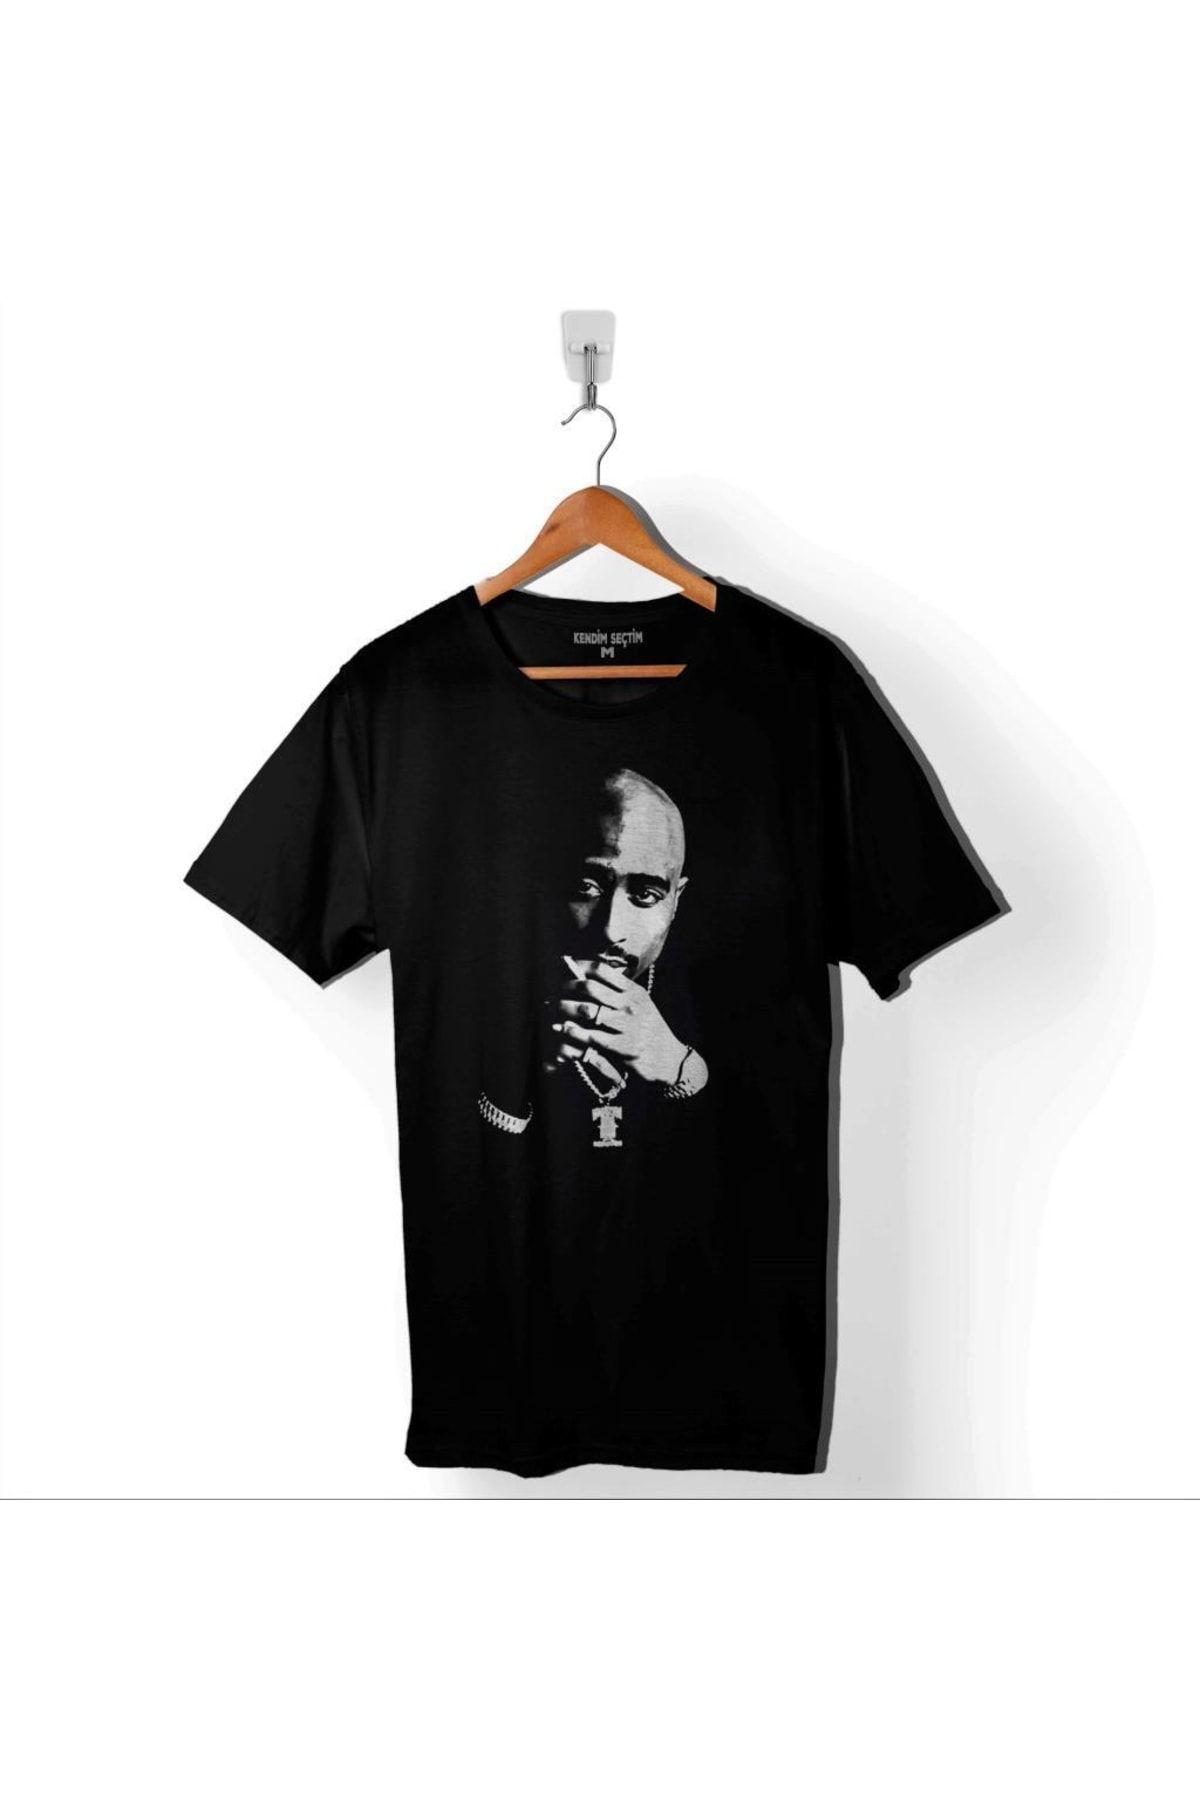 Kendim Seçtim Tupac Shakur Rap 2pac Rep Musıc Hıp Hop Team Erkek Tişört